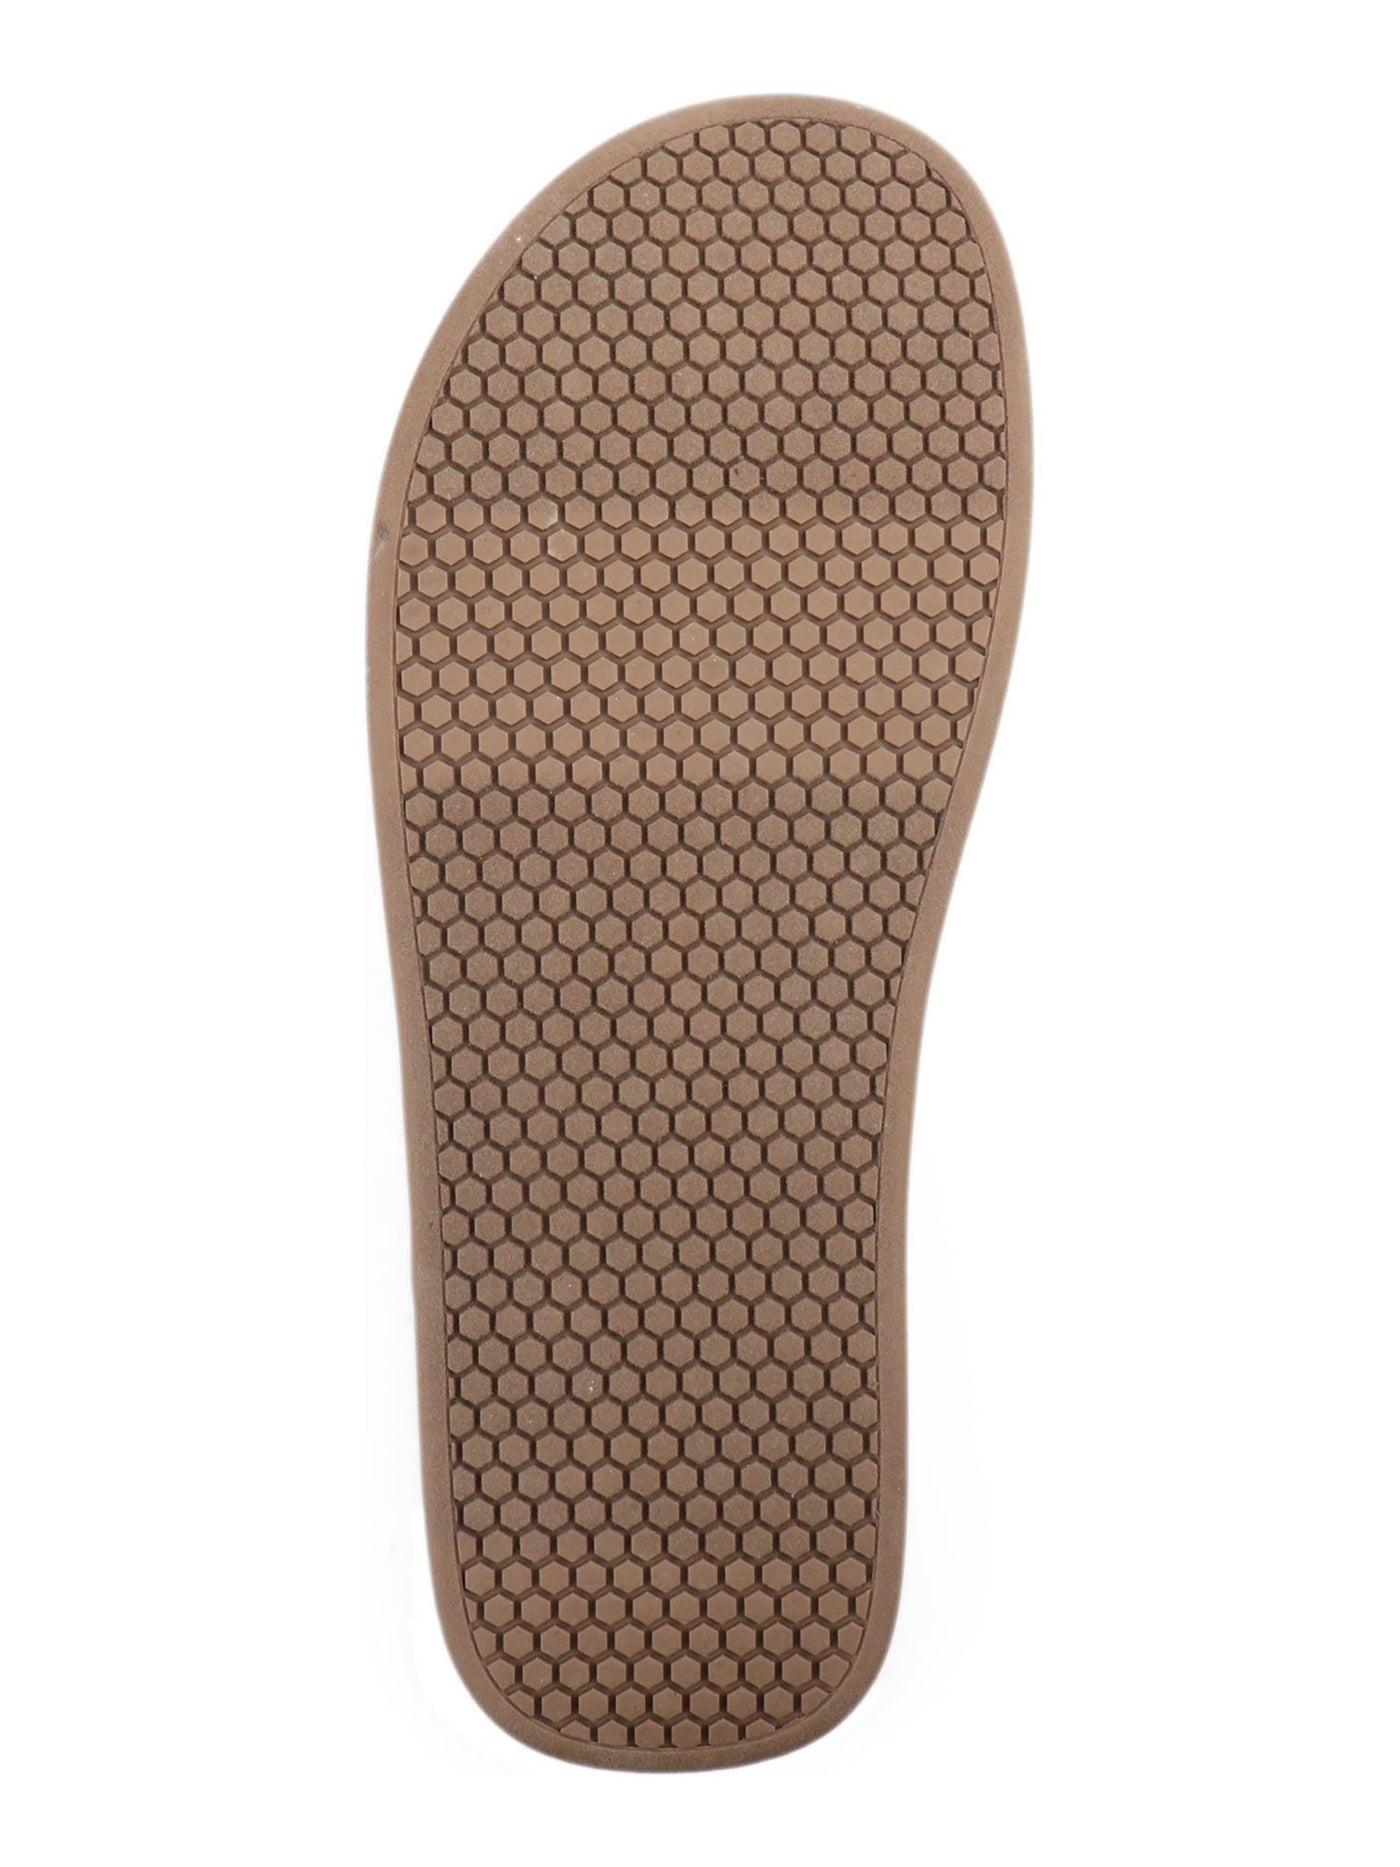 CLUBROOM Mens Coral Printed Padded Riley Round Toe Slip On Flip Flop Sandal 12 M